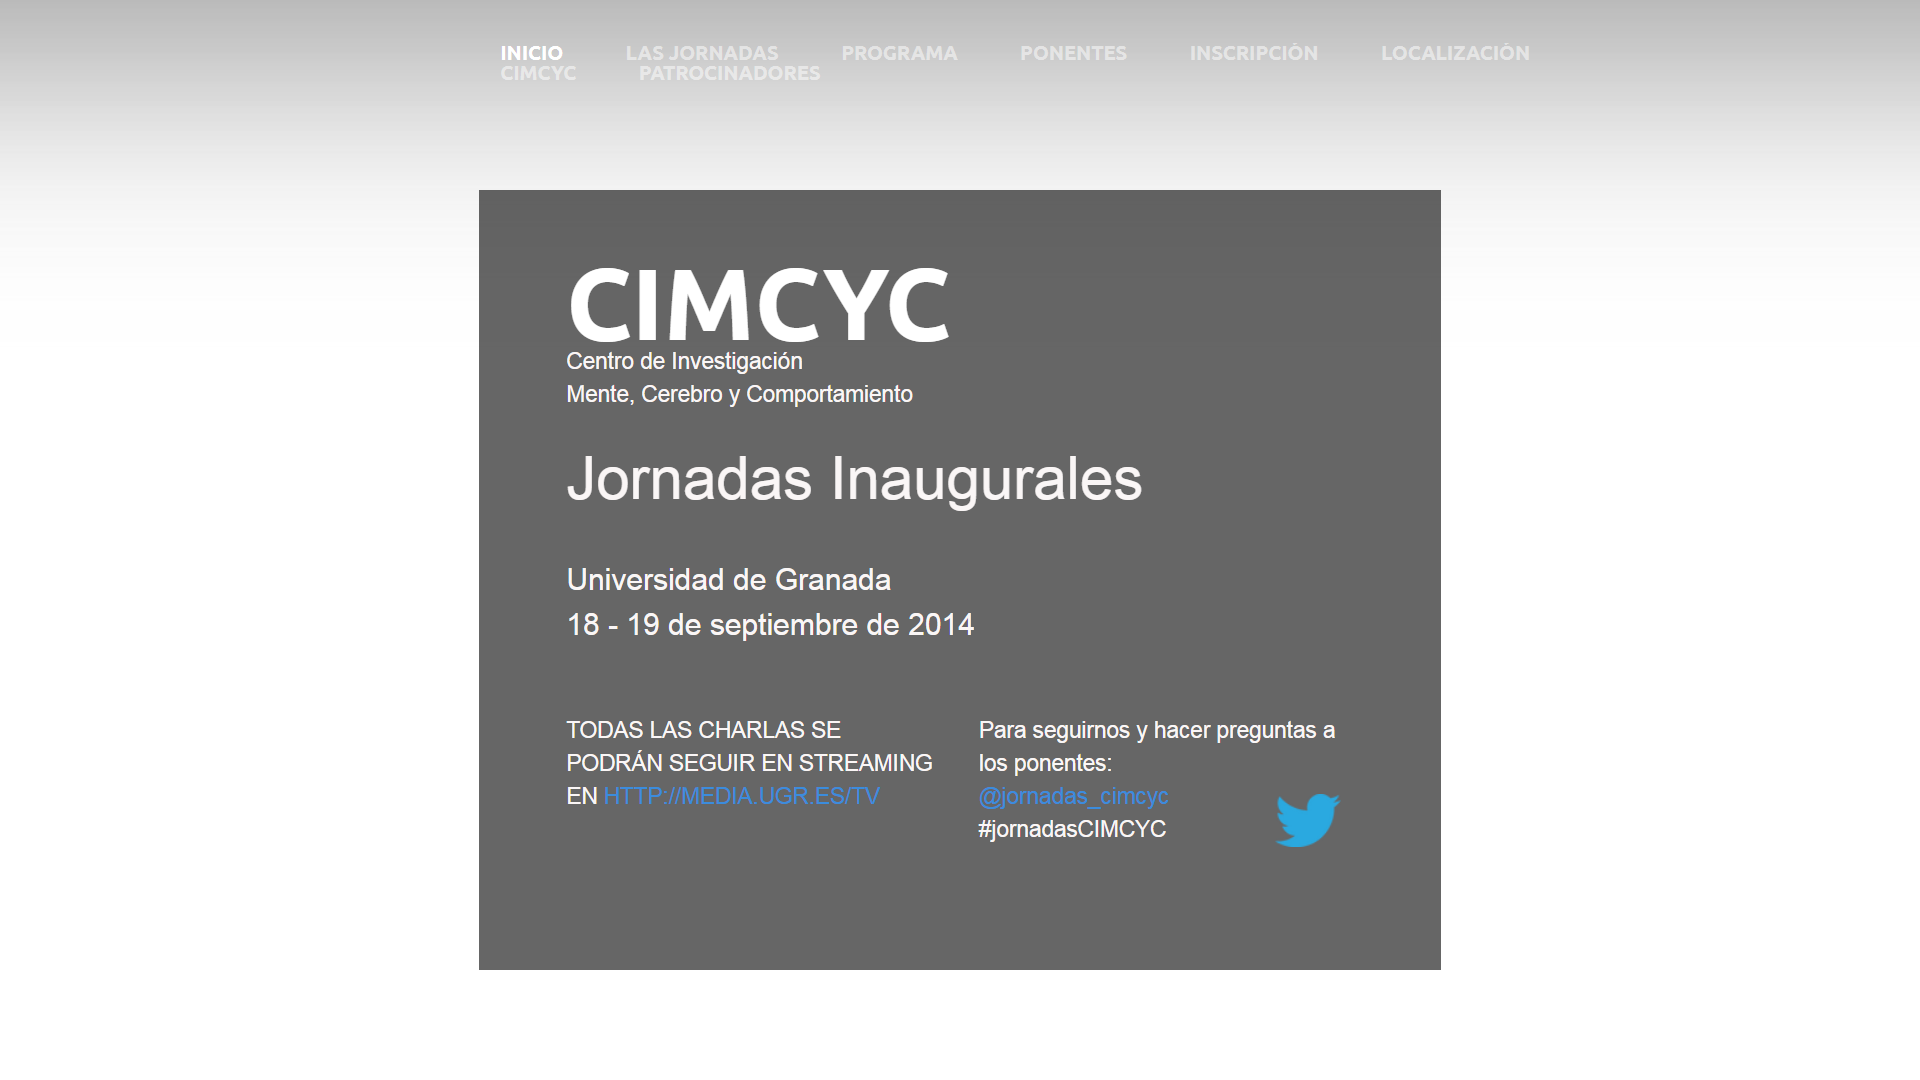 Jornadas inaugurales CIMCYC 2014